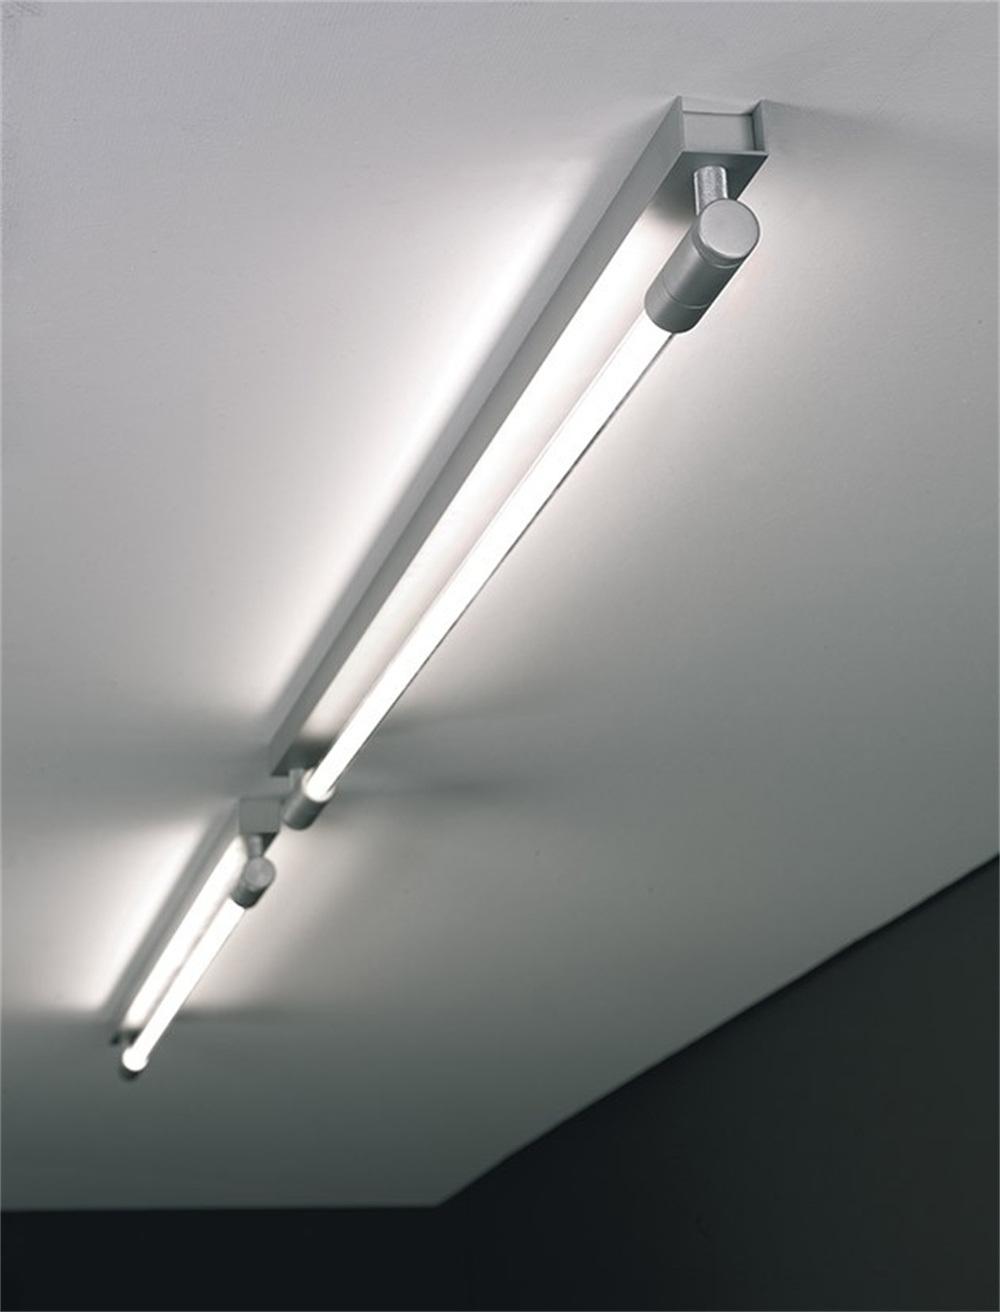 Roof C/W Premium Quality Home Manufacturing Equipment Accessories Tube Light